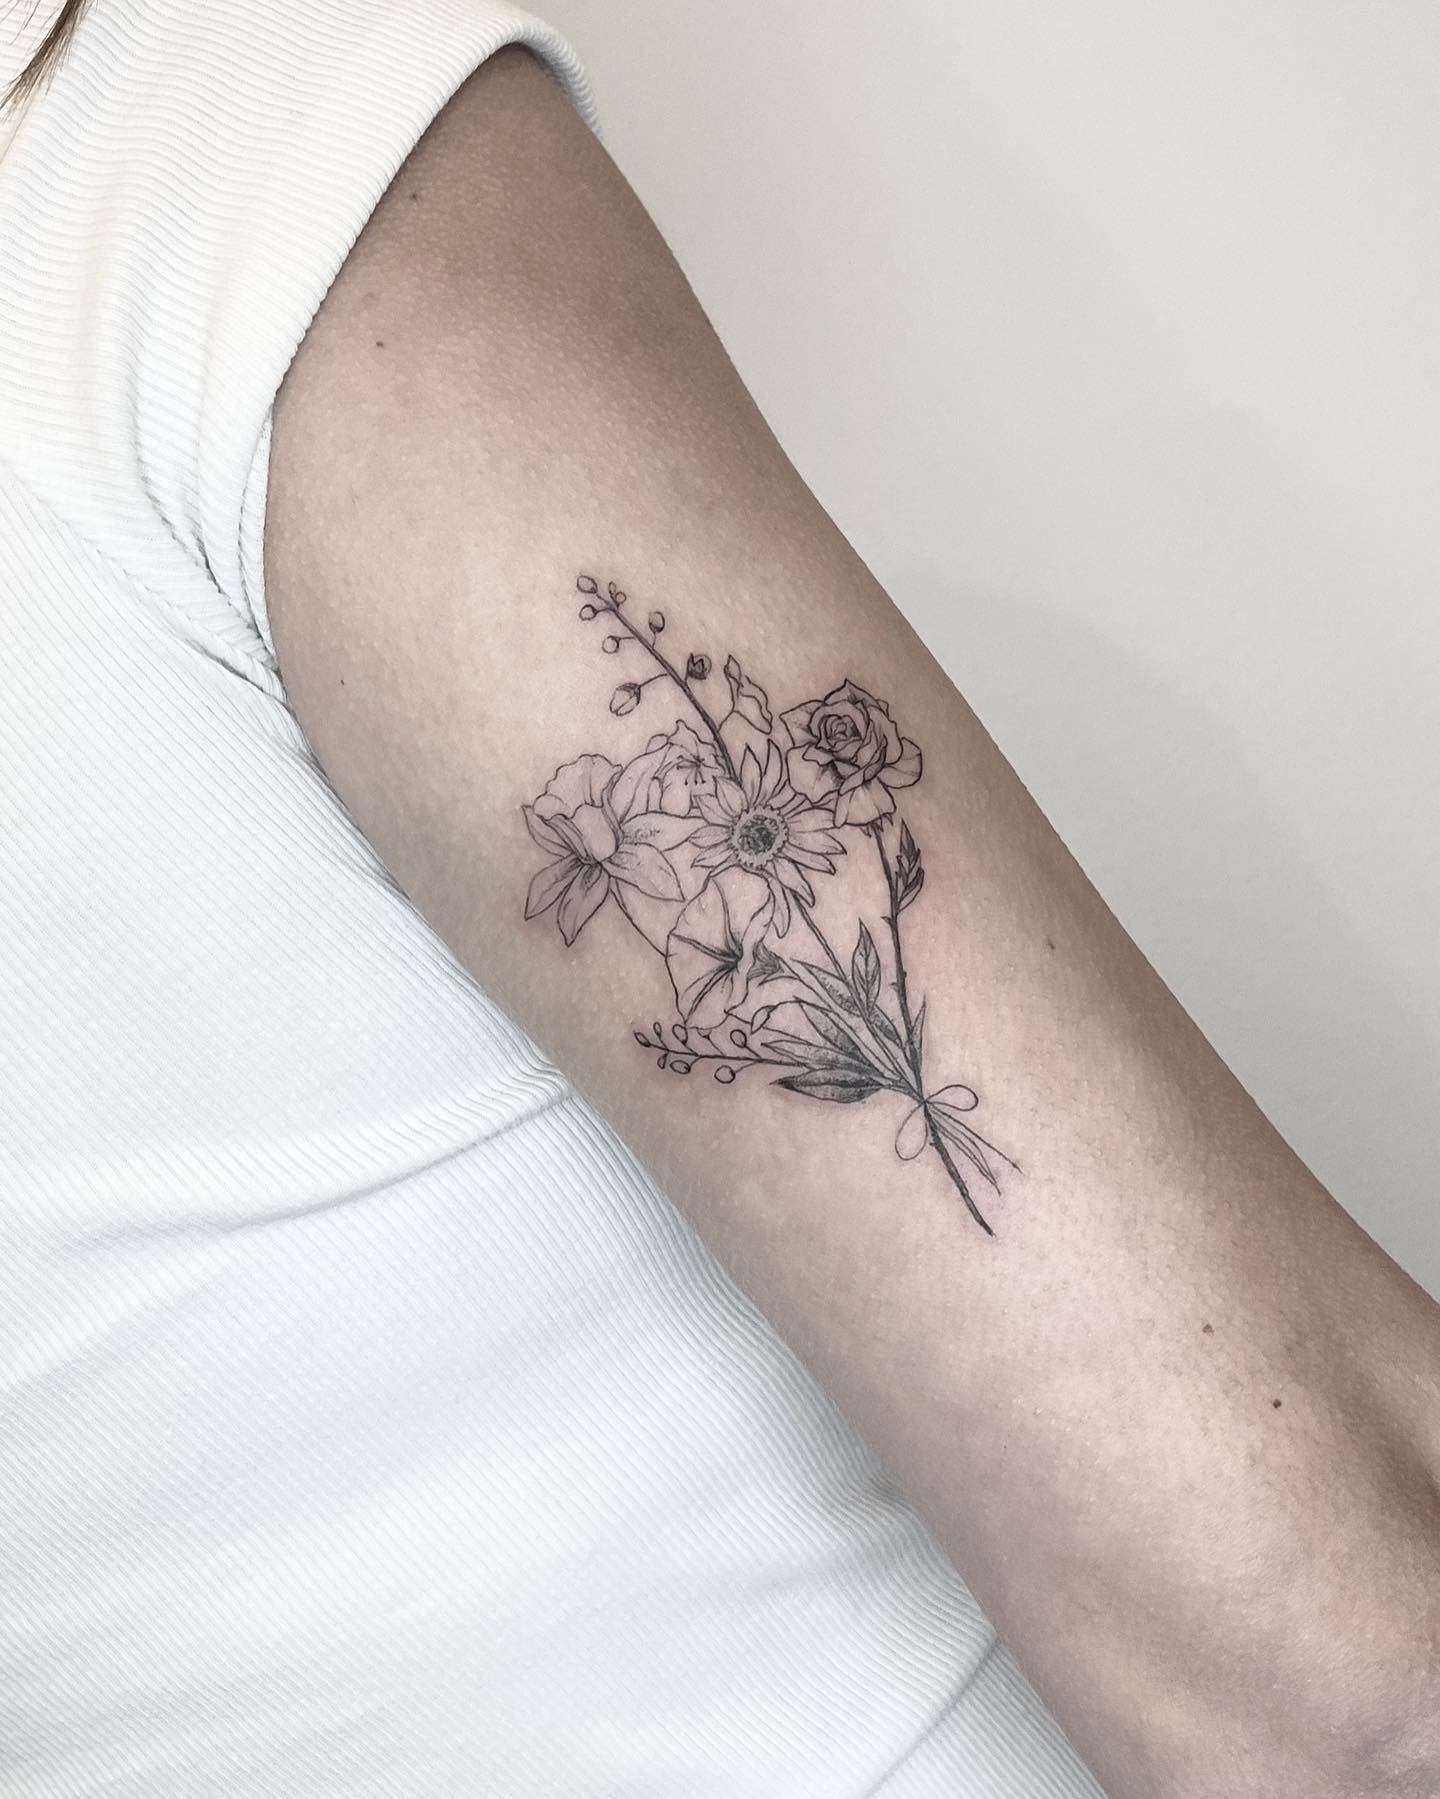 Elegant floral arrangement tattoo on forearm